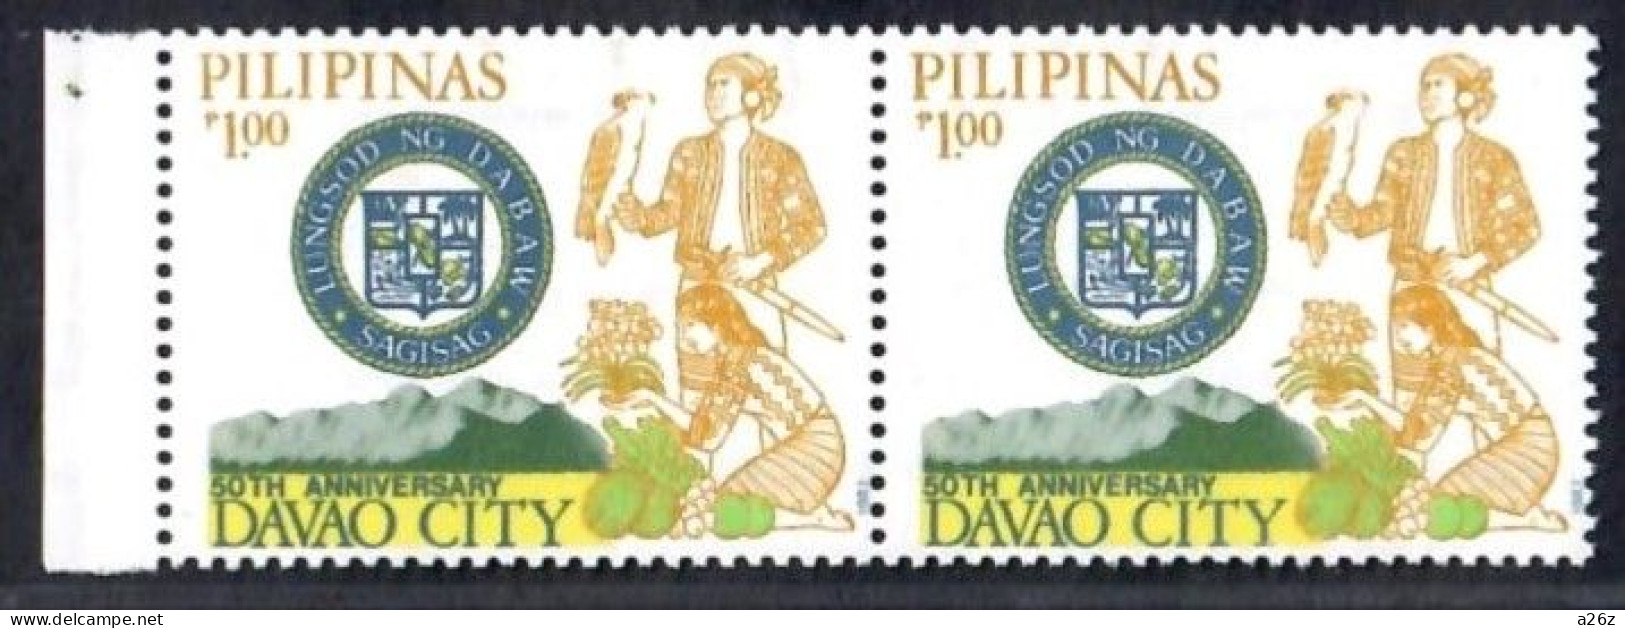 Philippines 1987 Davao City, 50th Anniv. Falconer, Woman Planting Etc. Marginal Horiz. Pair 1X 2V MNH - Philippinen